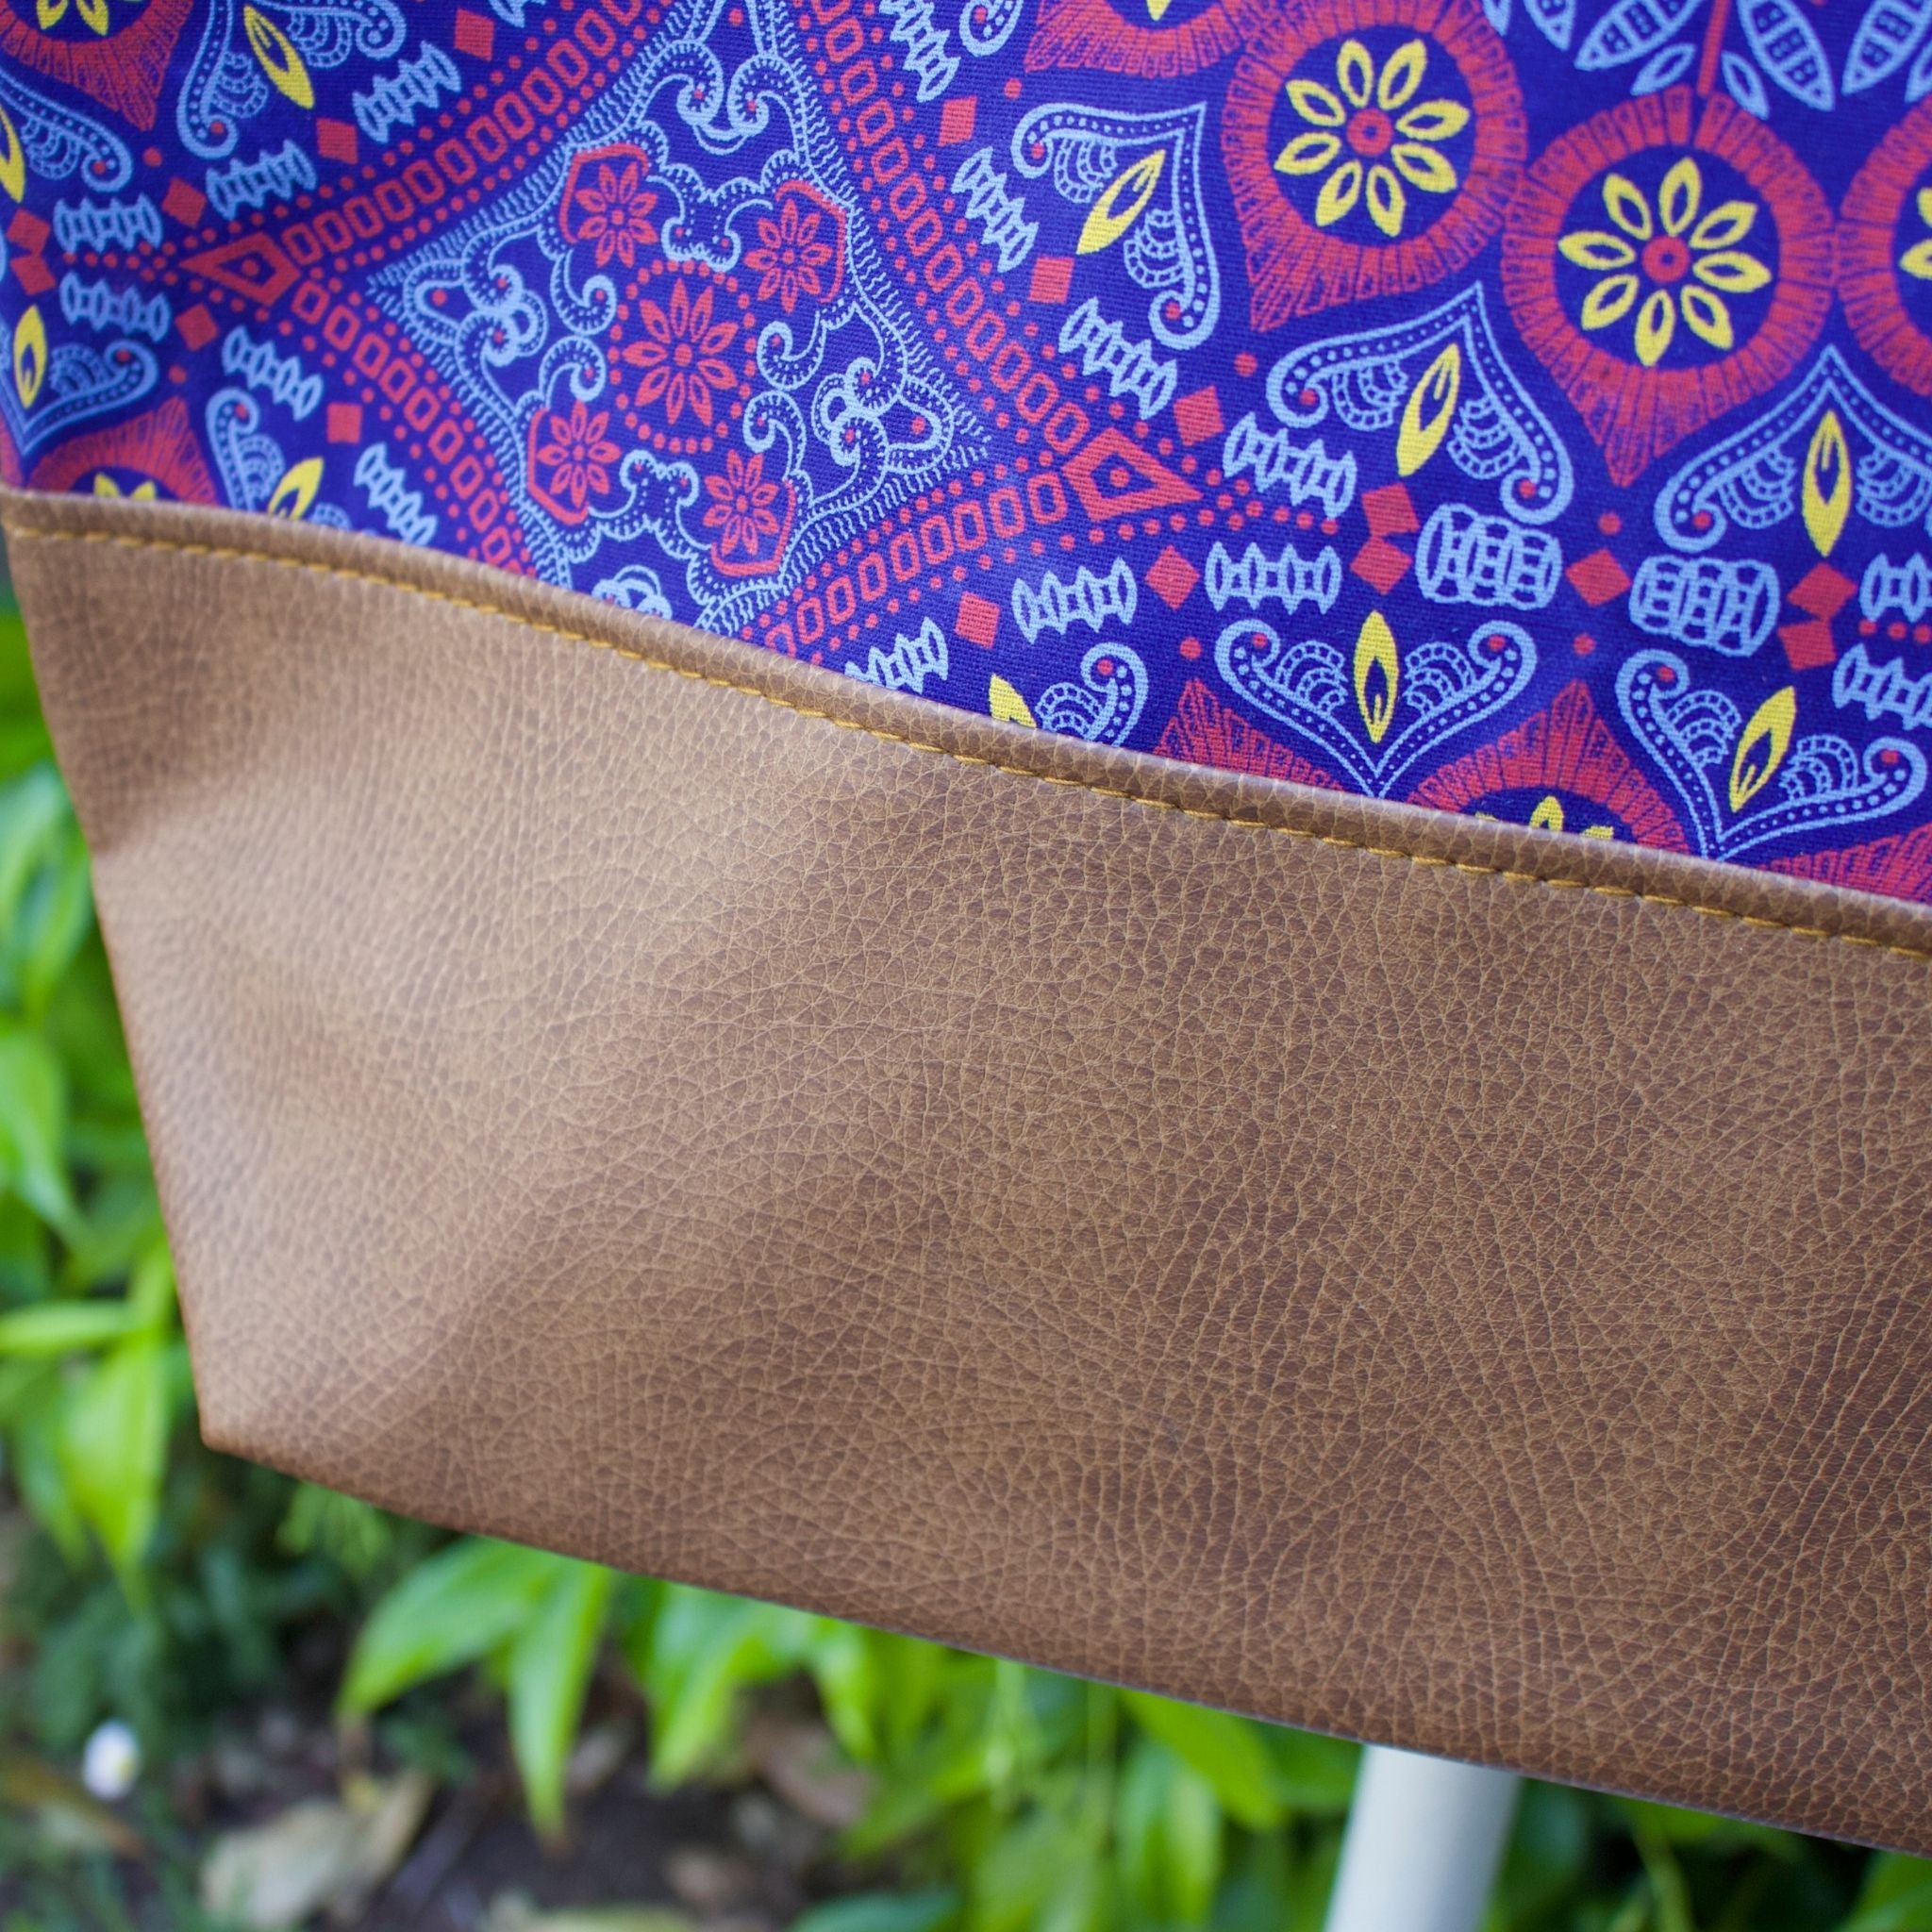 Shwe Leather-Look Tote Bag